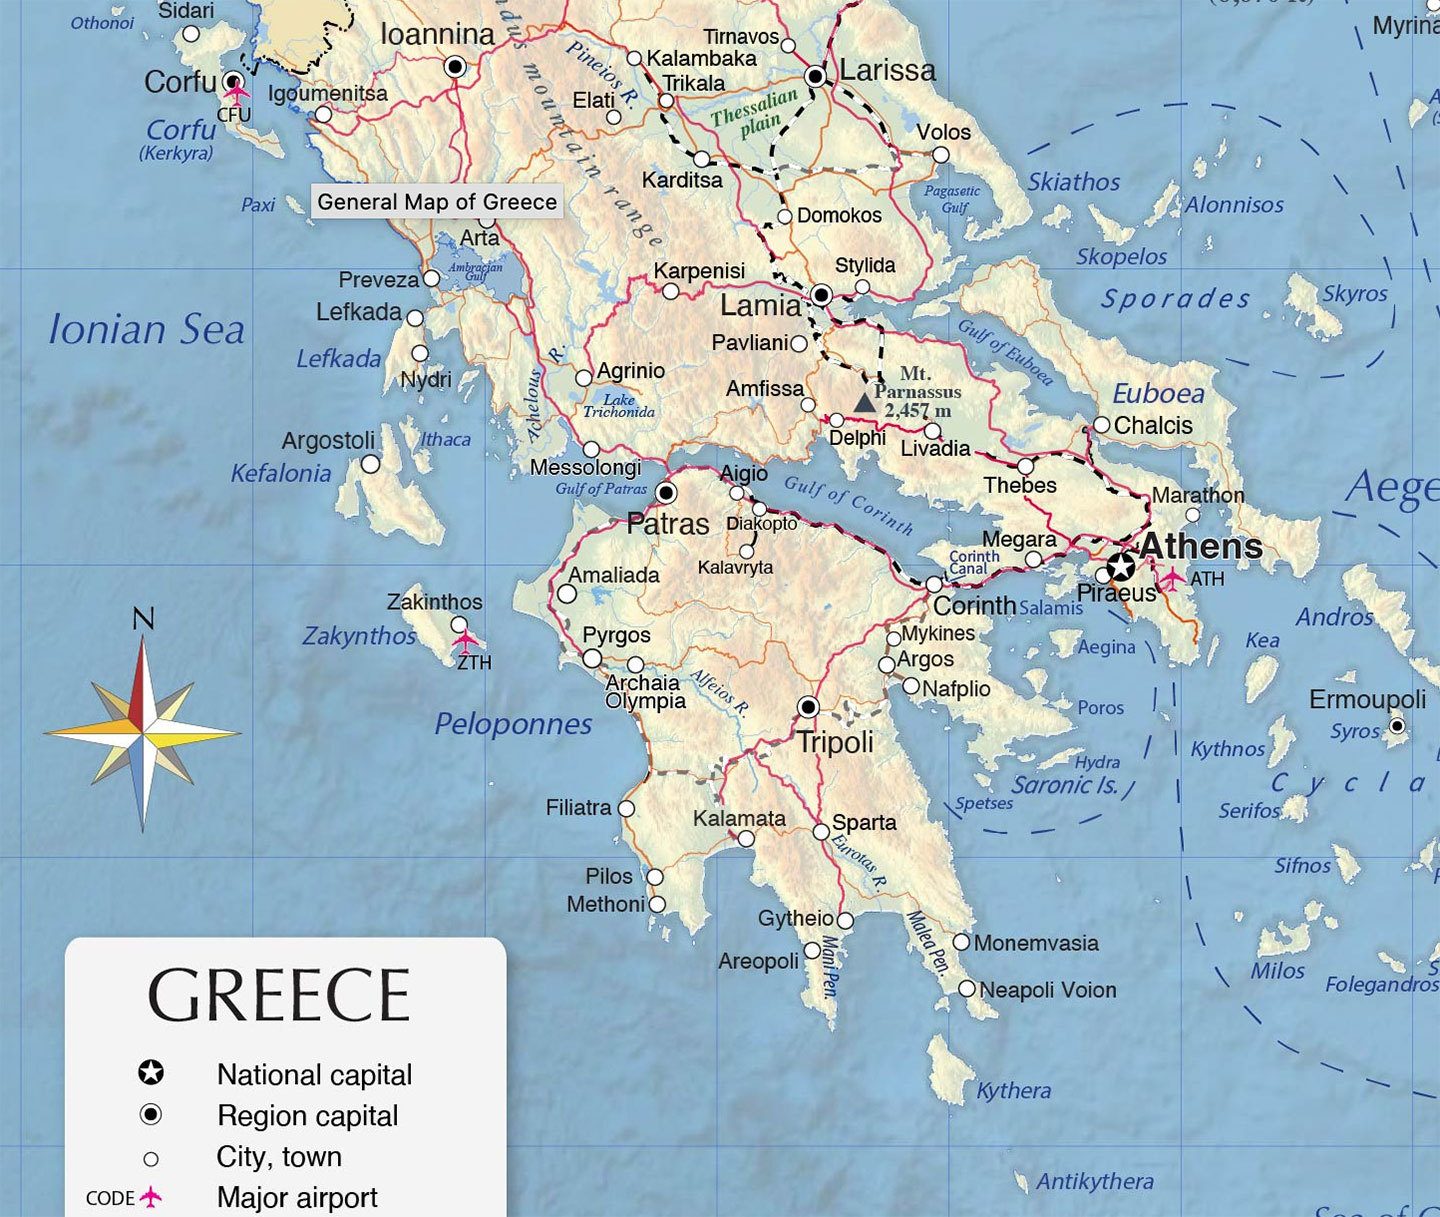 A nice map of Greece